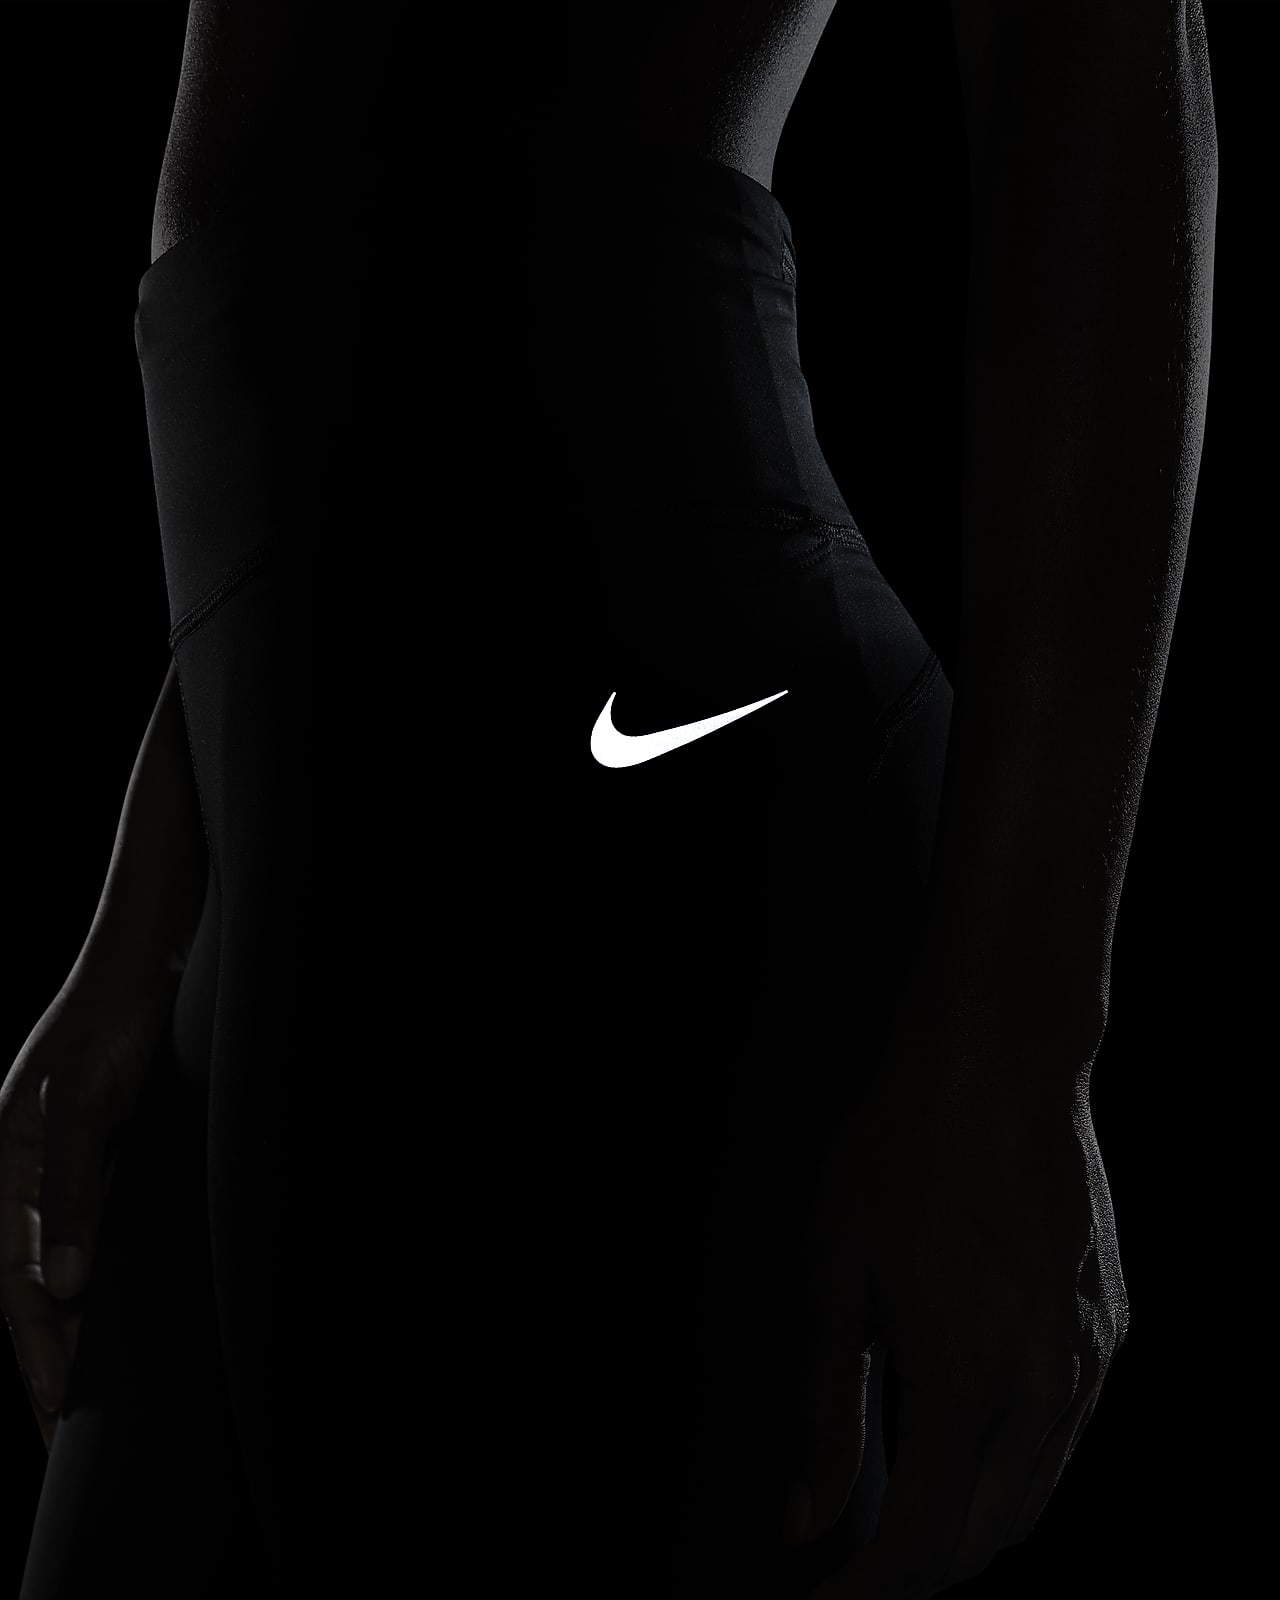 NWT Nike Women's Retro Run Fast Running Training Gym Leggings Pants DM2321  500 S 